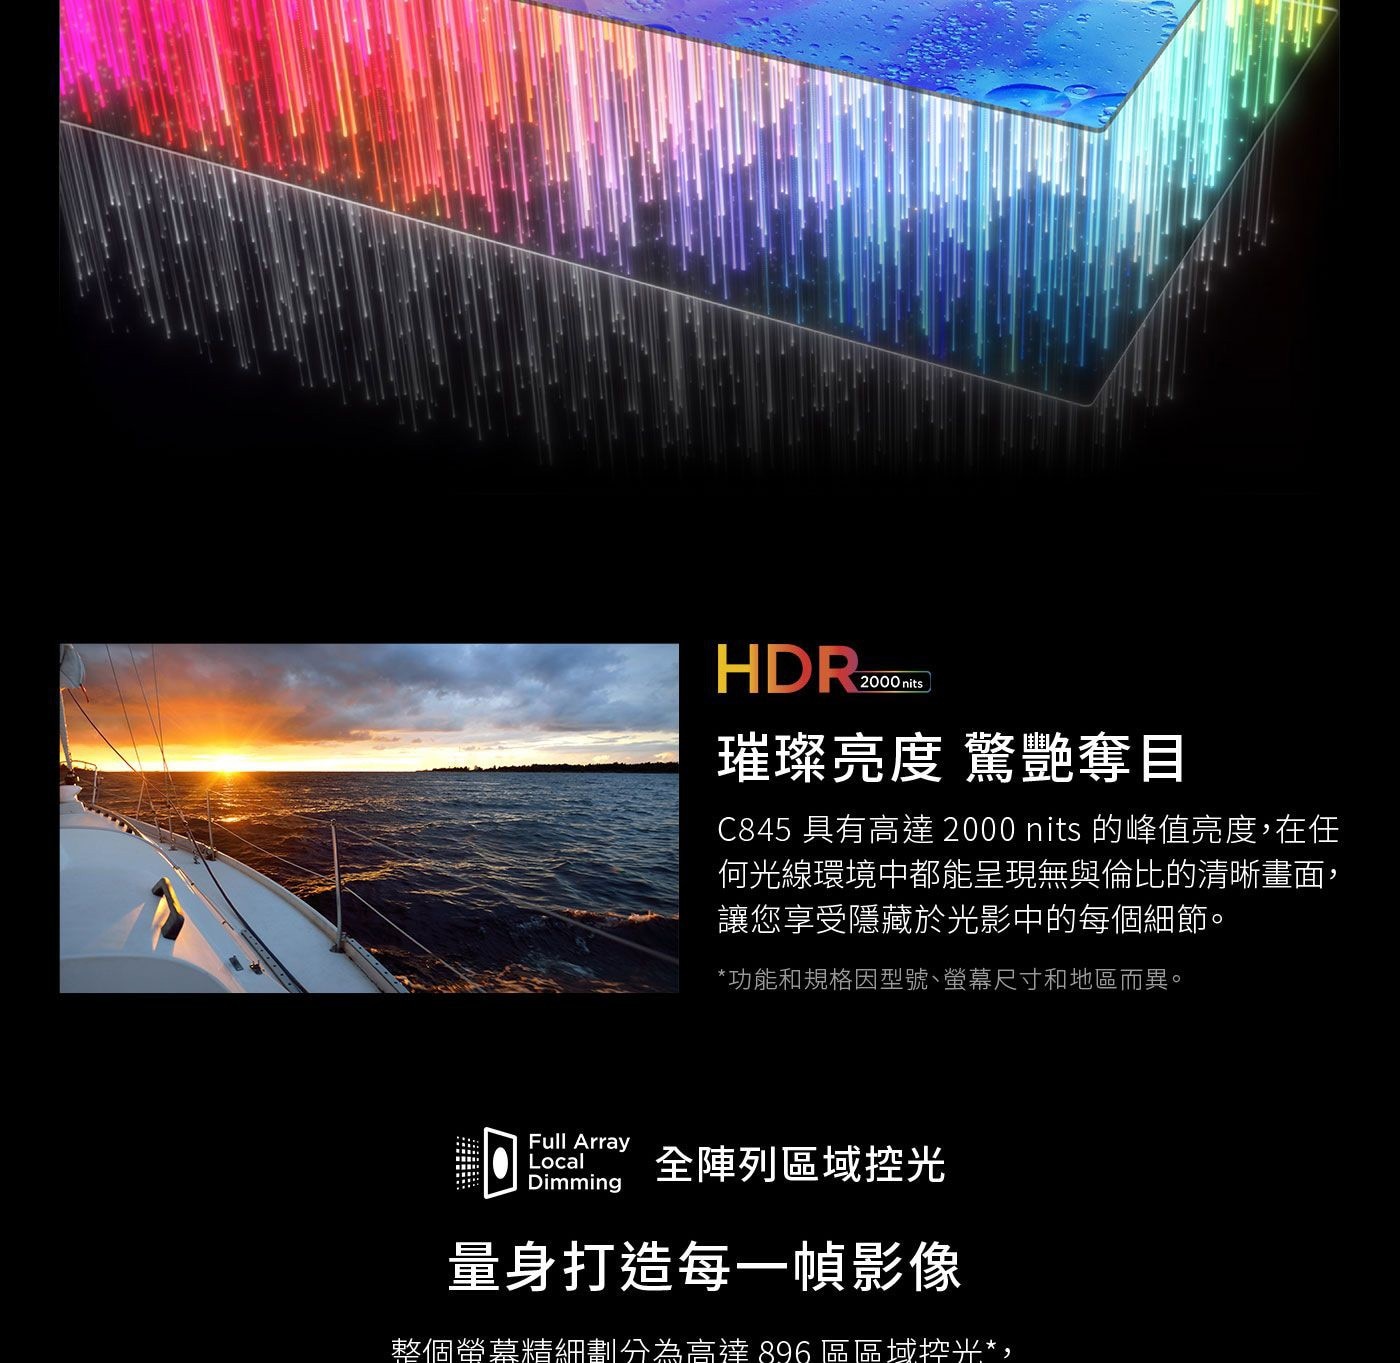 TCL 75吋 4K Mini LED QLED Google TV 量子智能連網液晶顯示器 75C845璀璨亮度驚艷奪目HDR 2000 nits璀璨亮度 驚艷奪目